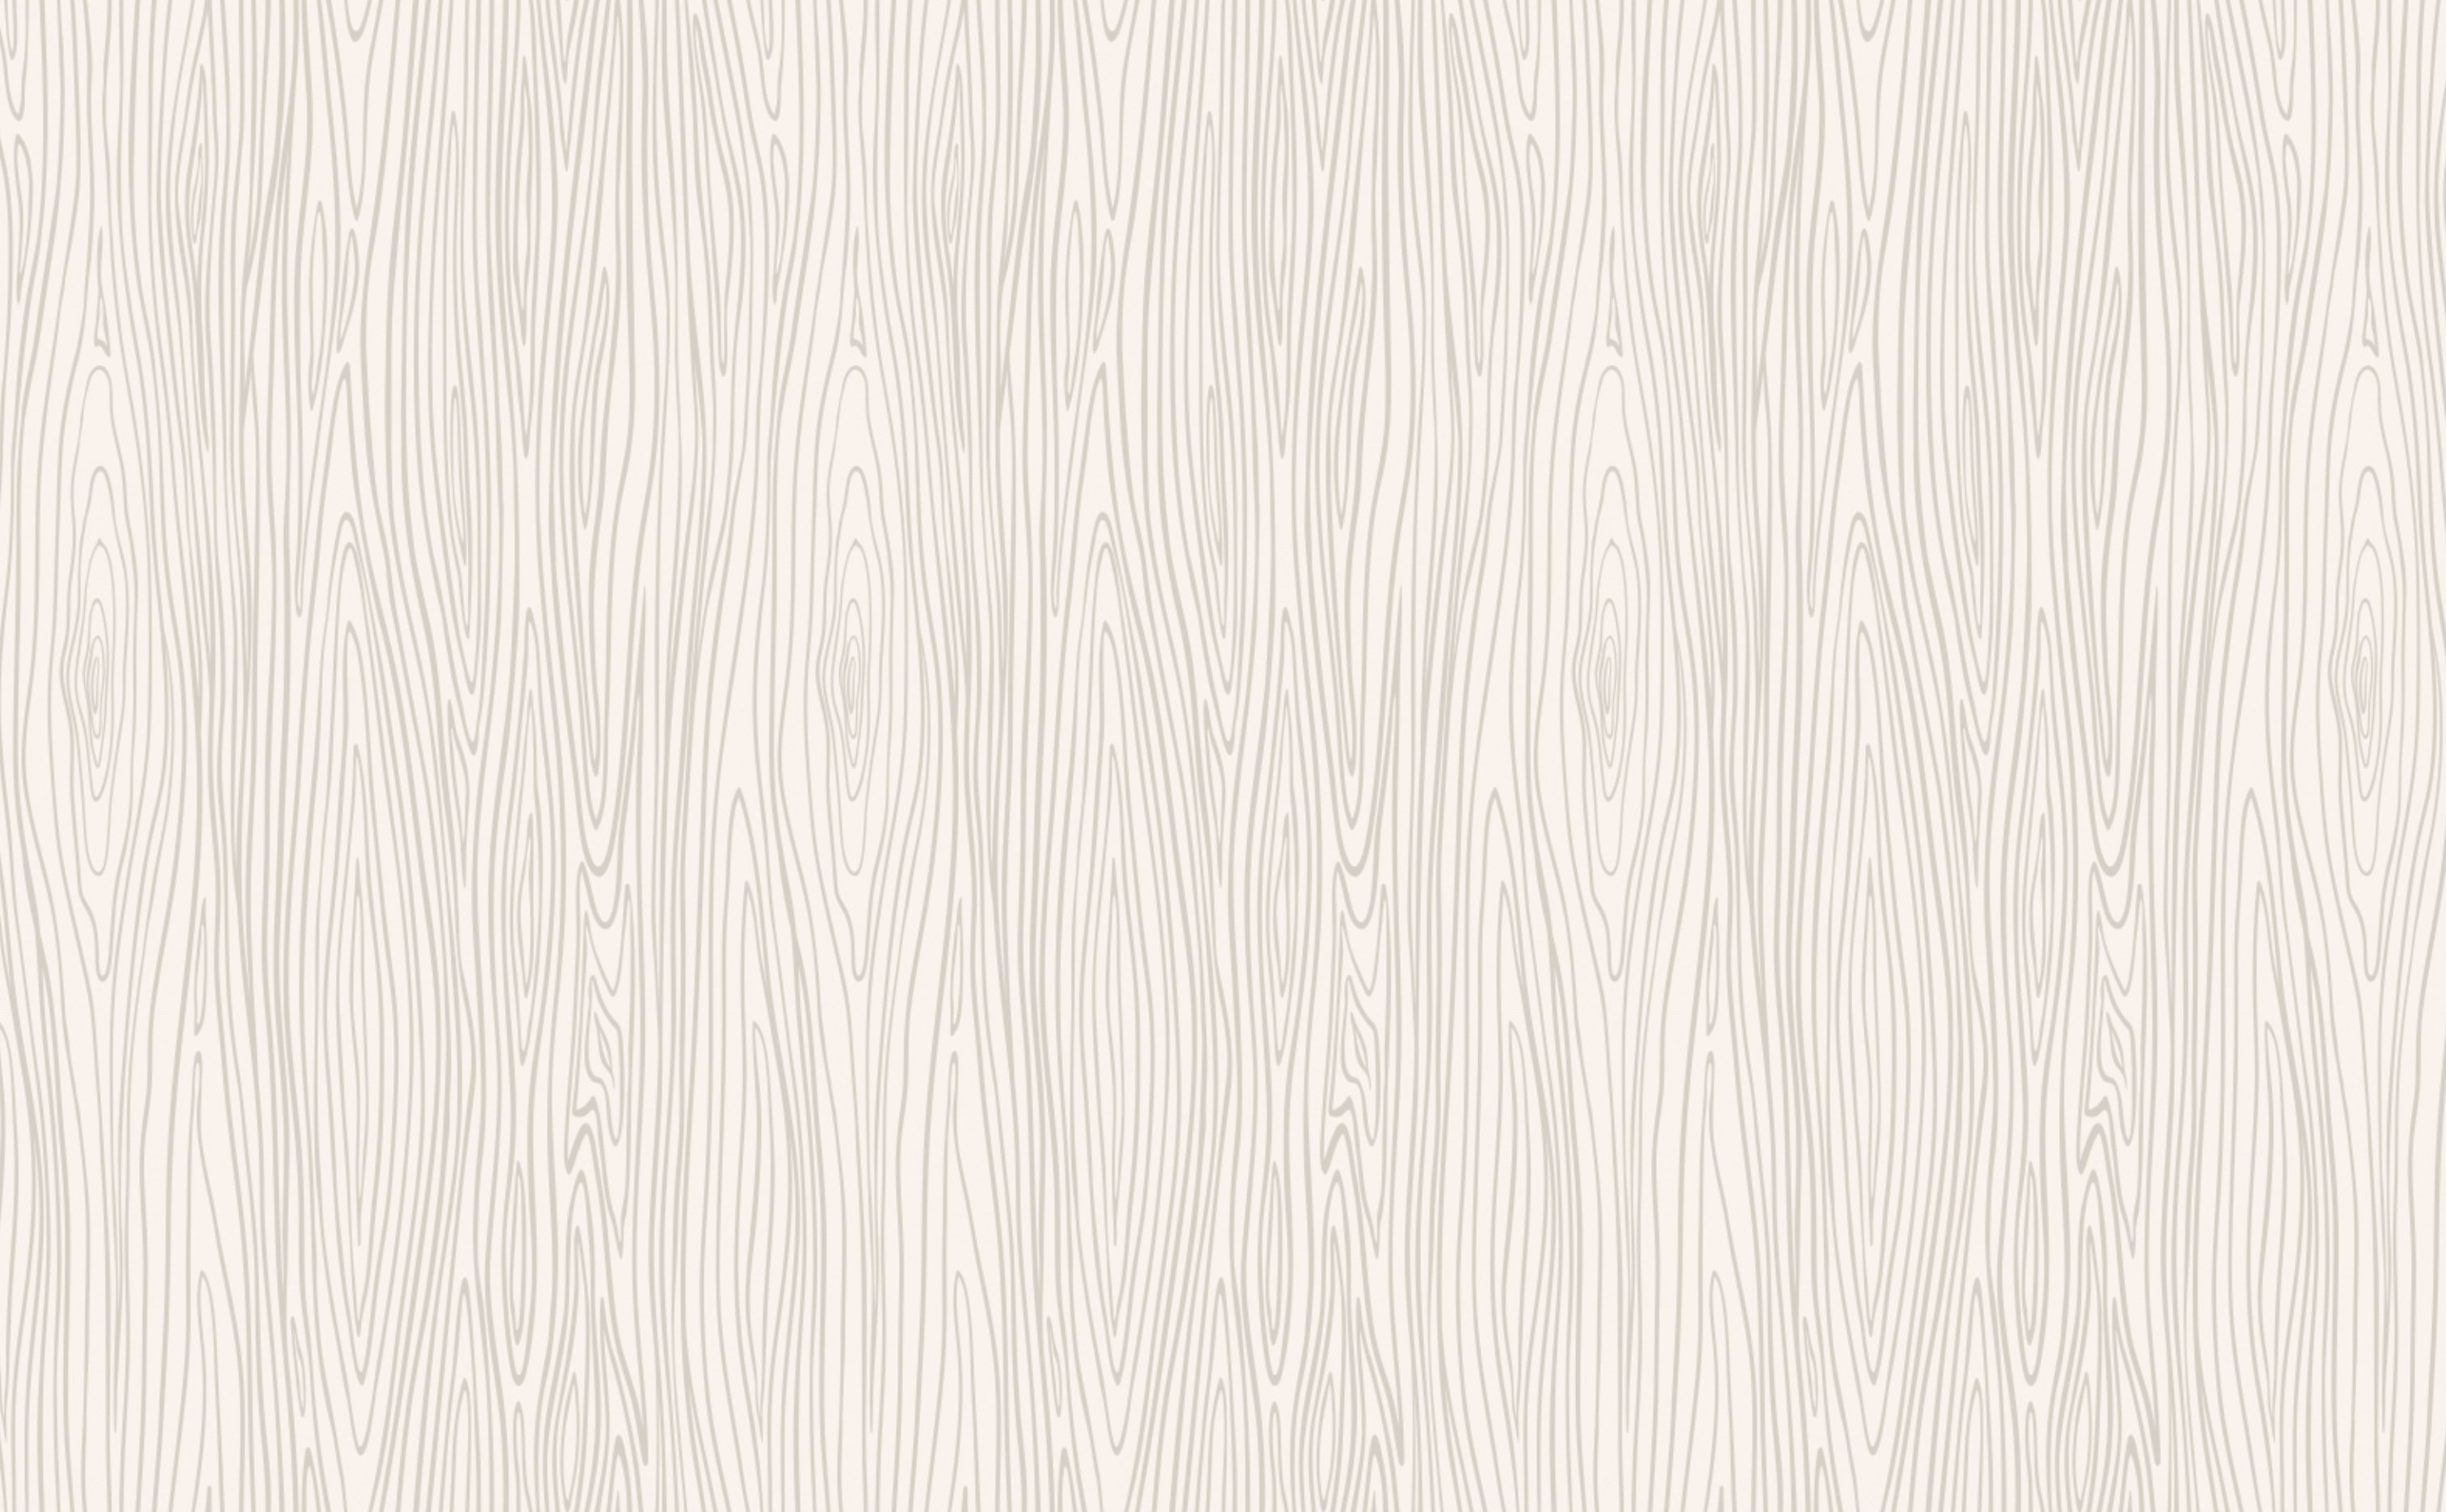 Faux Wood Grain Wallpaper for Walls